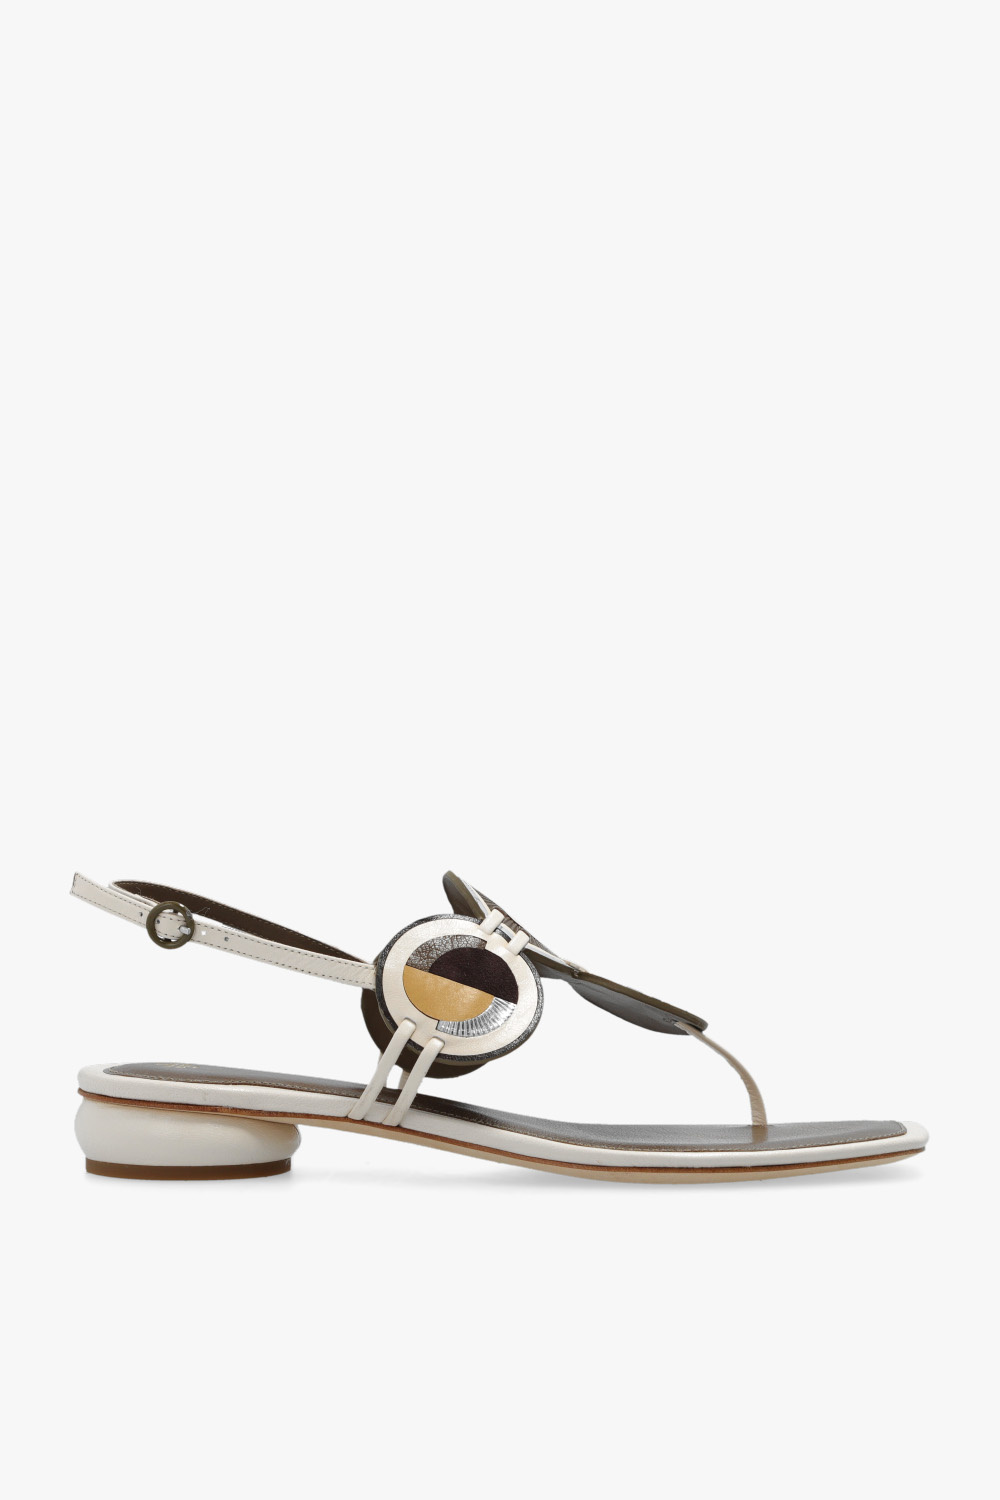 Cream 'Marquetry' sandals Tory Burch - Vitkac Australia